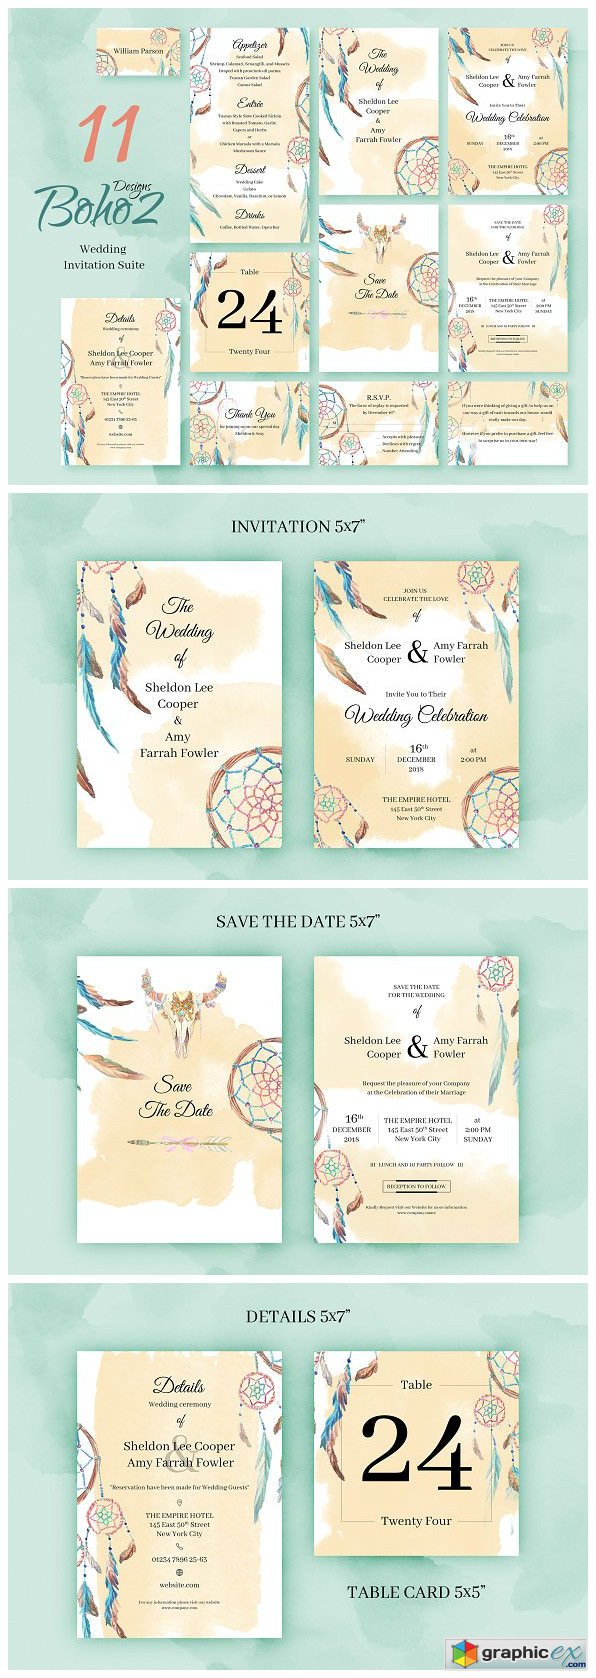 Boho2 Wedding Invitation Package